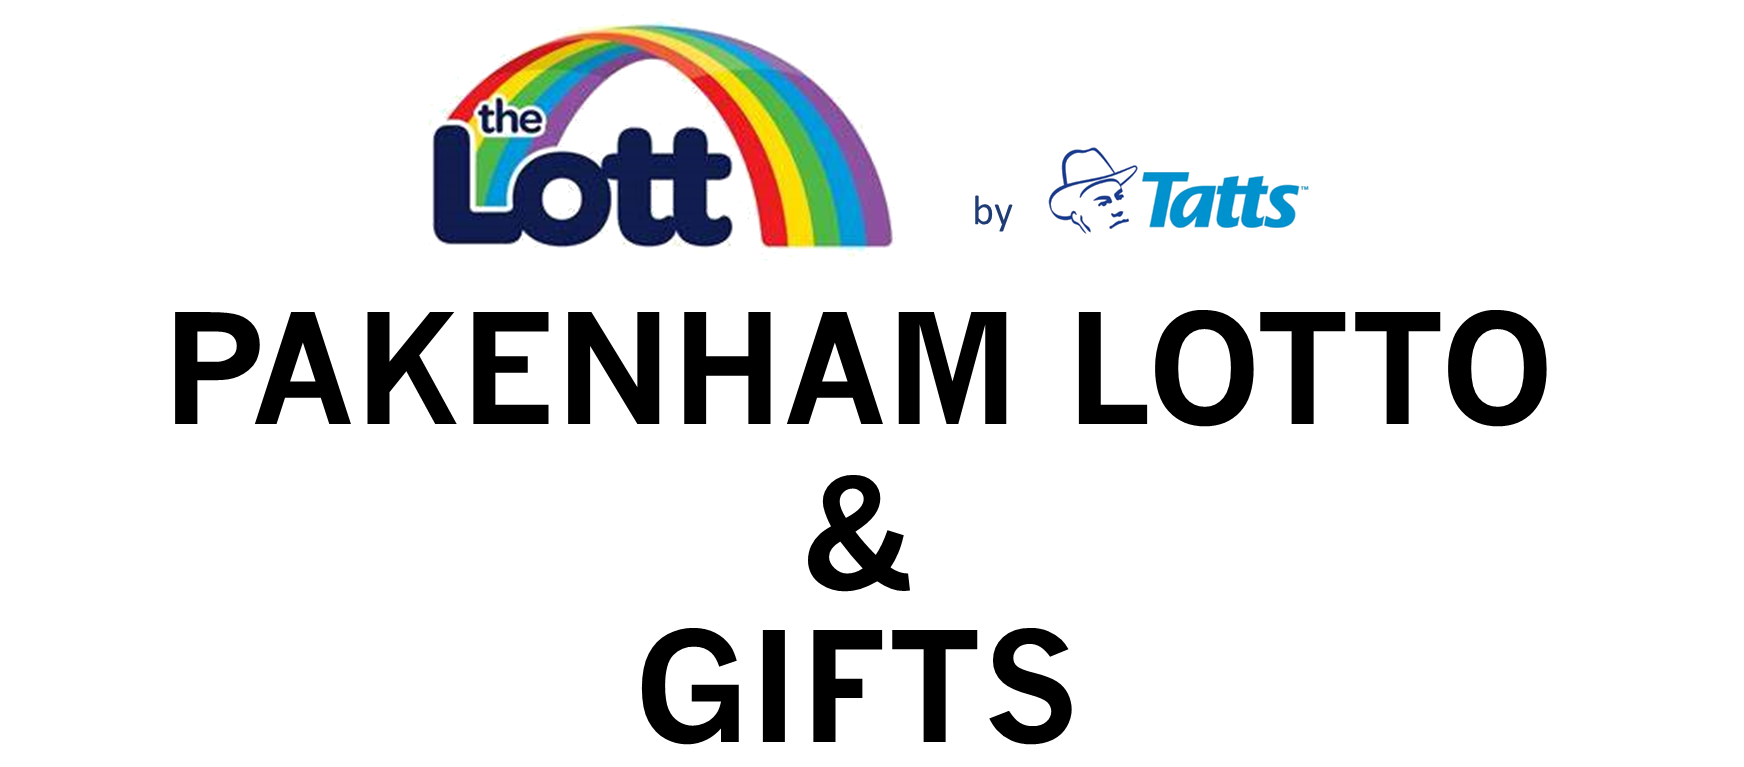 Pakenham Lotto & Gifts